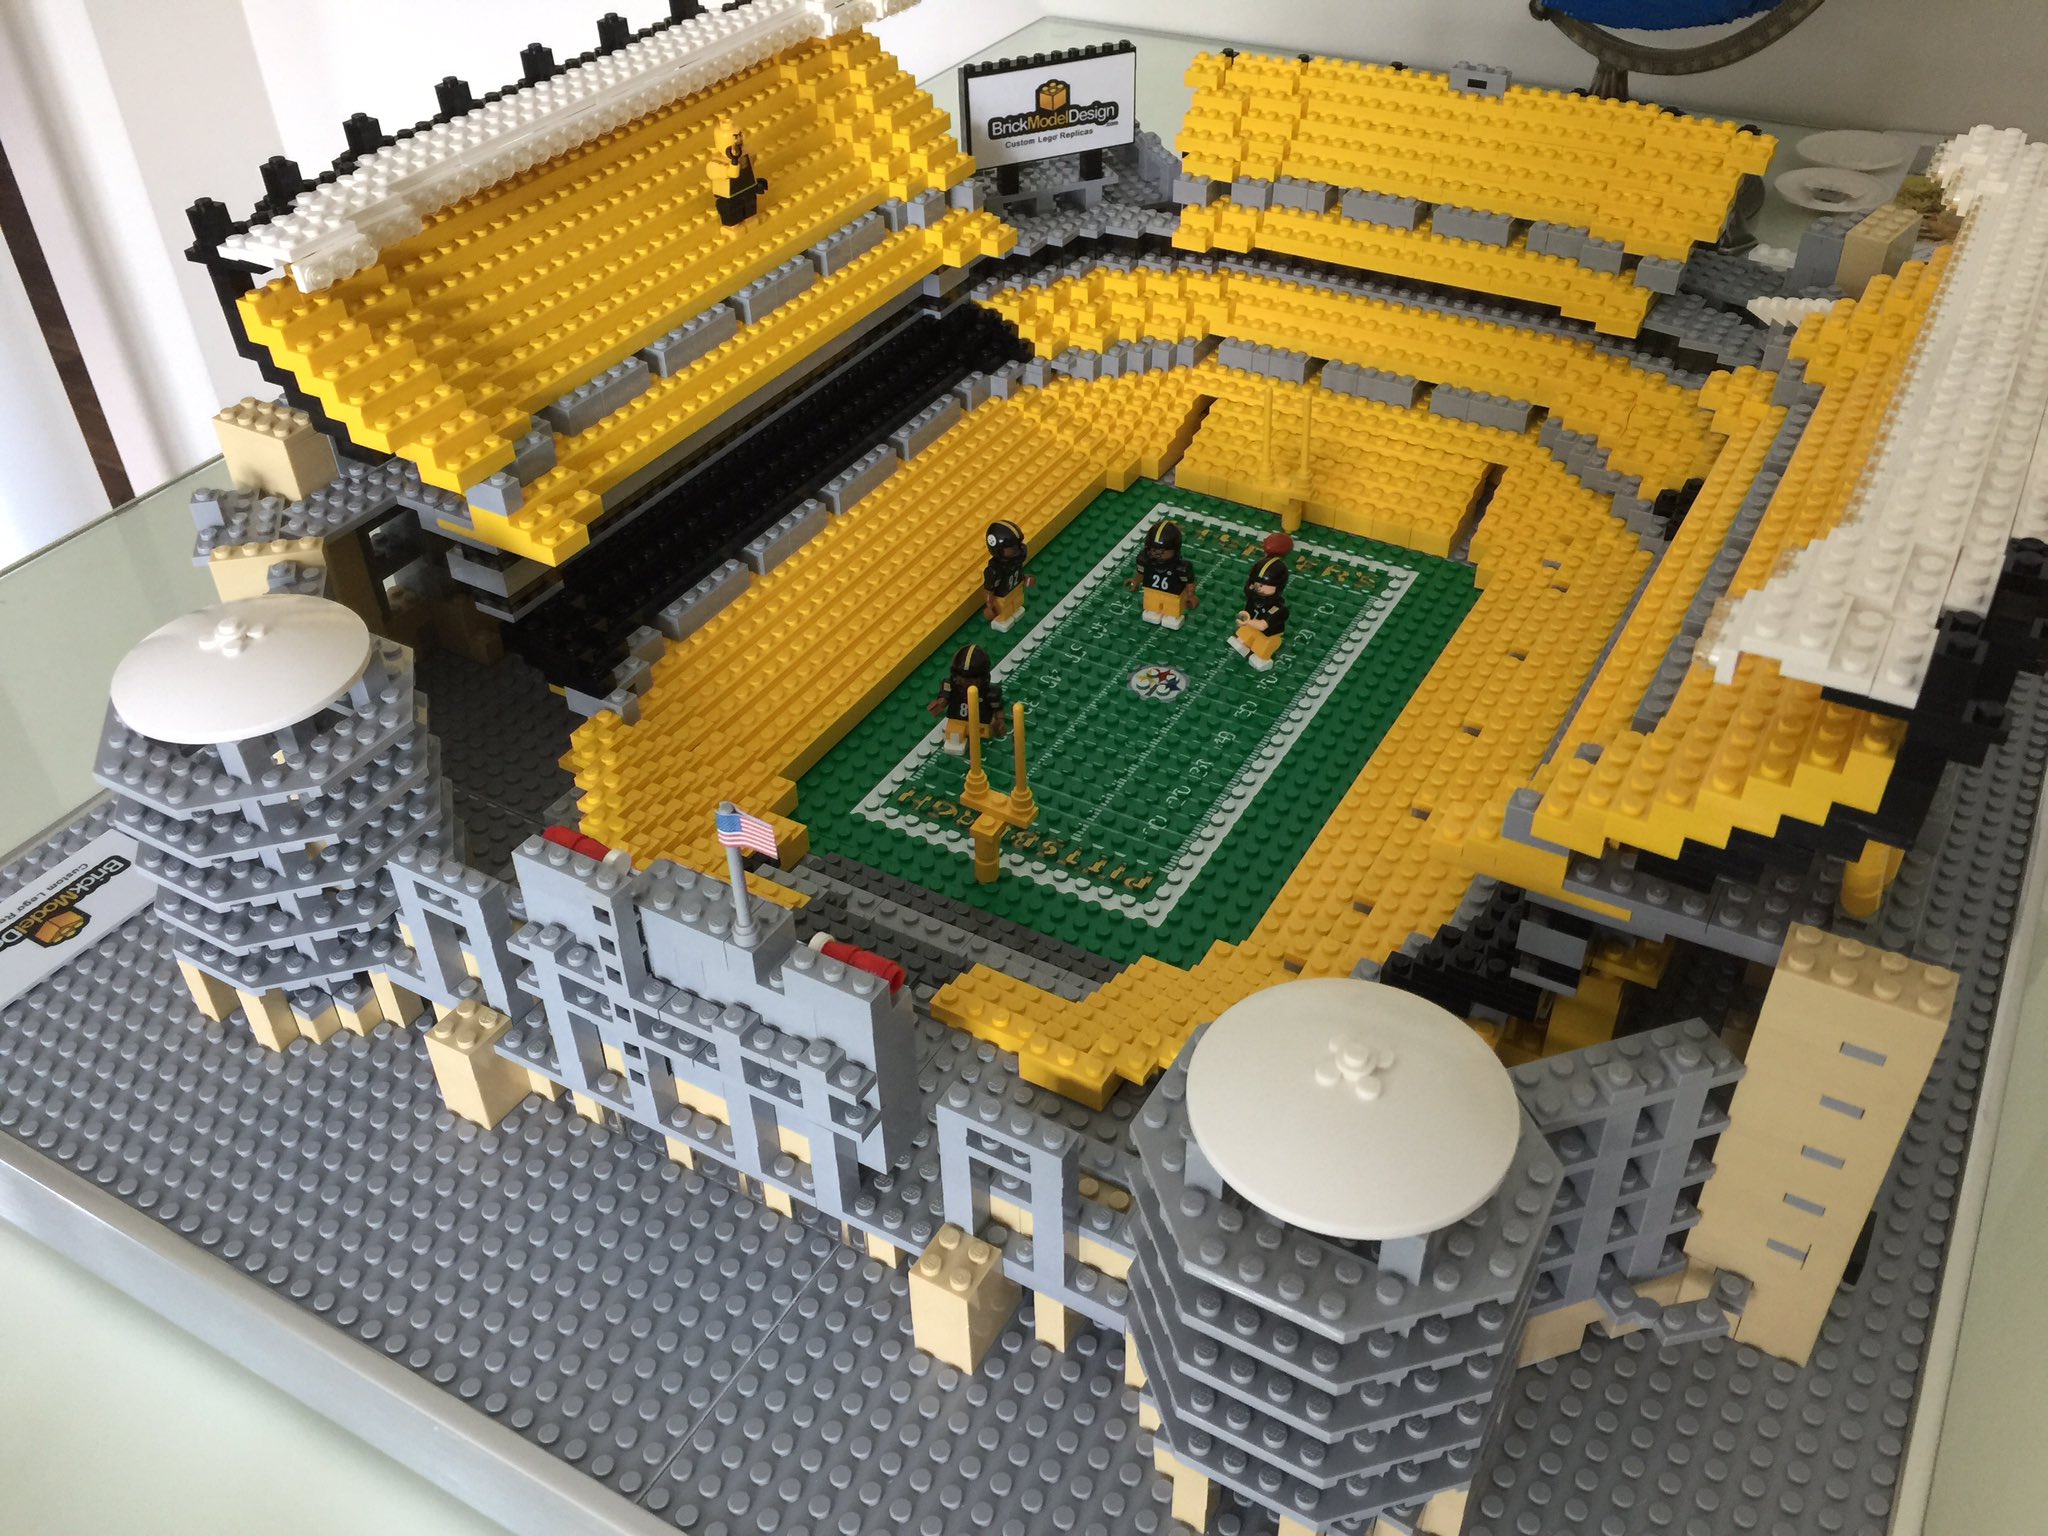 Jason Burik on X: '#Lego Heinz Field will be on display this weekend at  #FamilyFest at Heinz Field @steelers @SteelersUnite #Steelers   / X